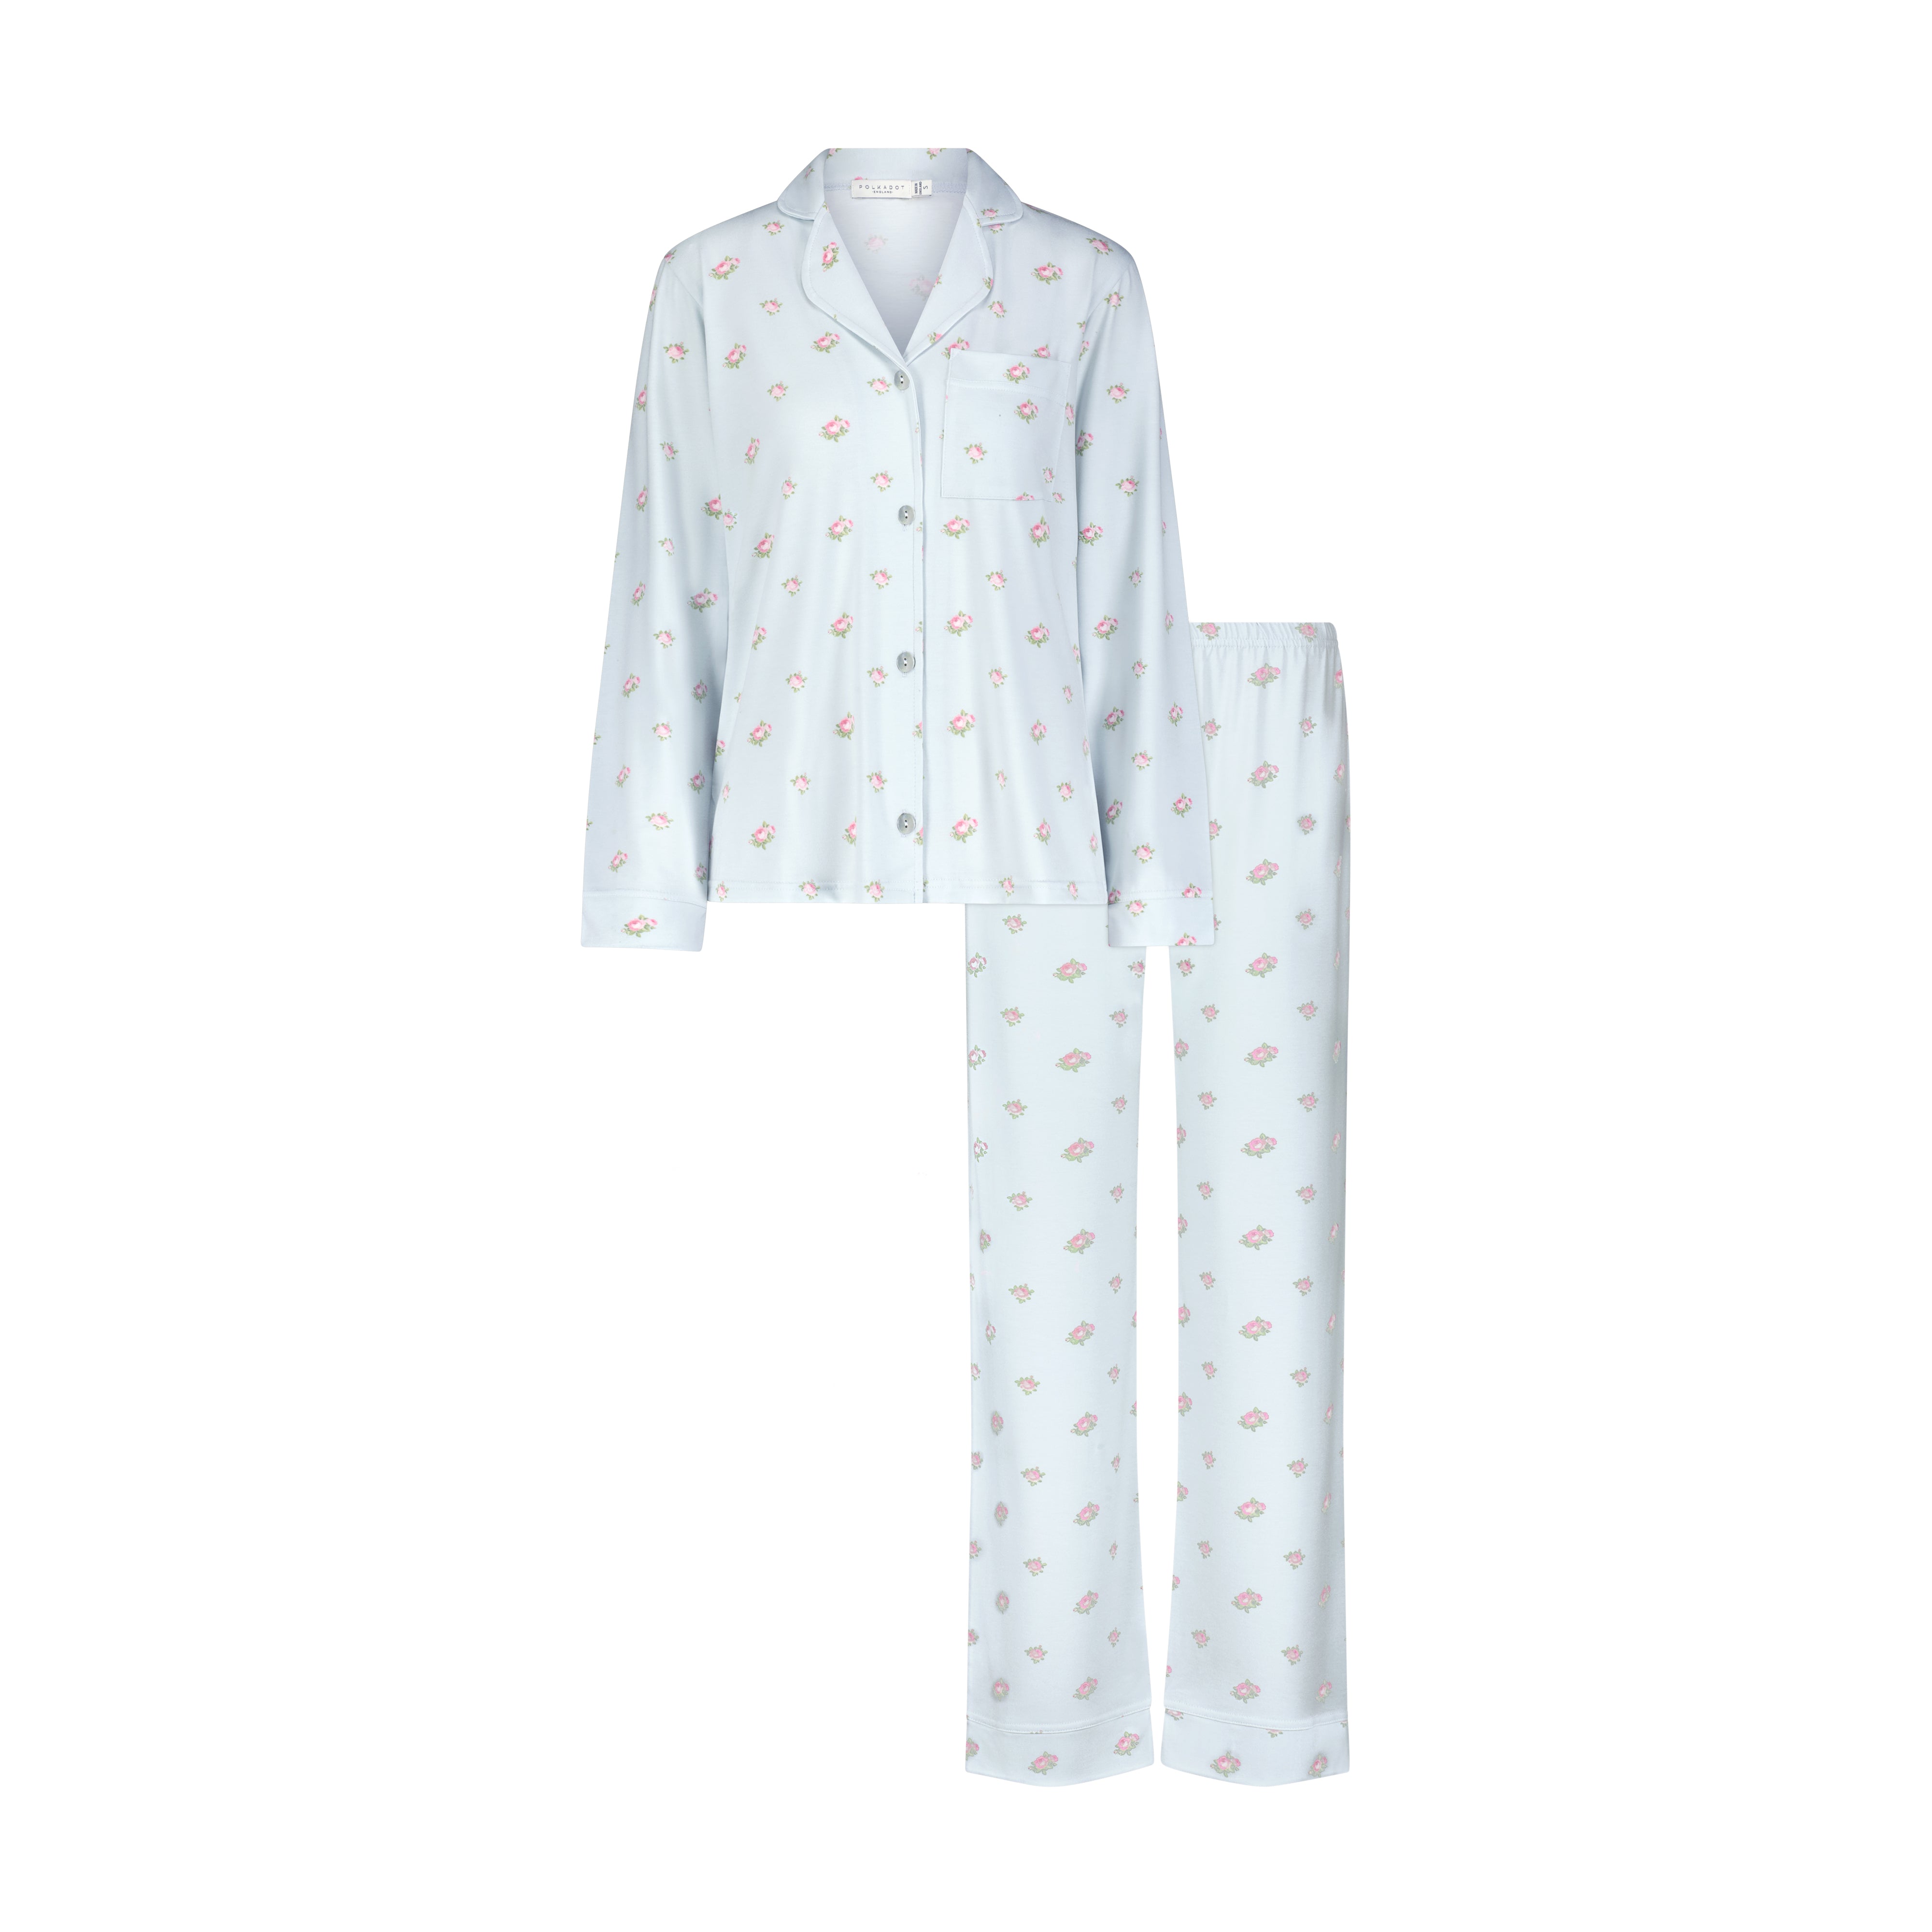 CHARLEY Pajama Set in Blue Ciel Rose Print -Restocked